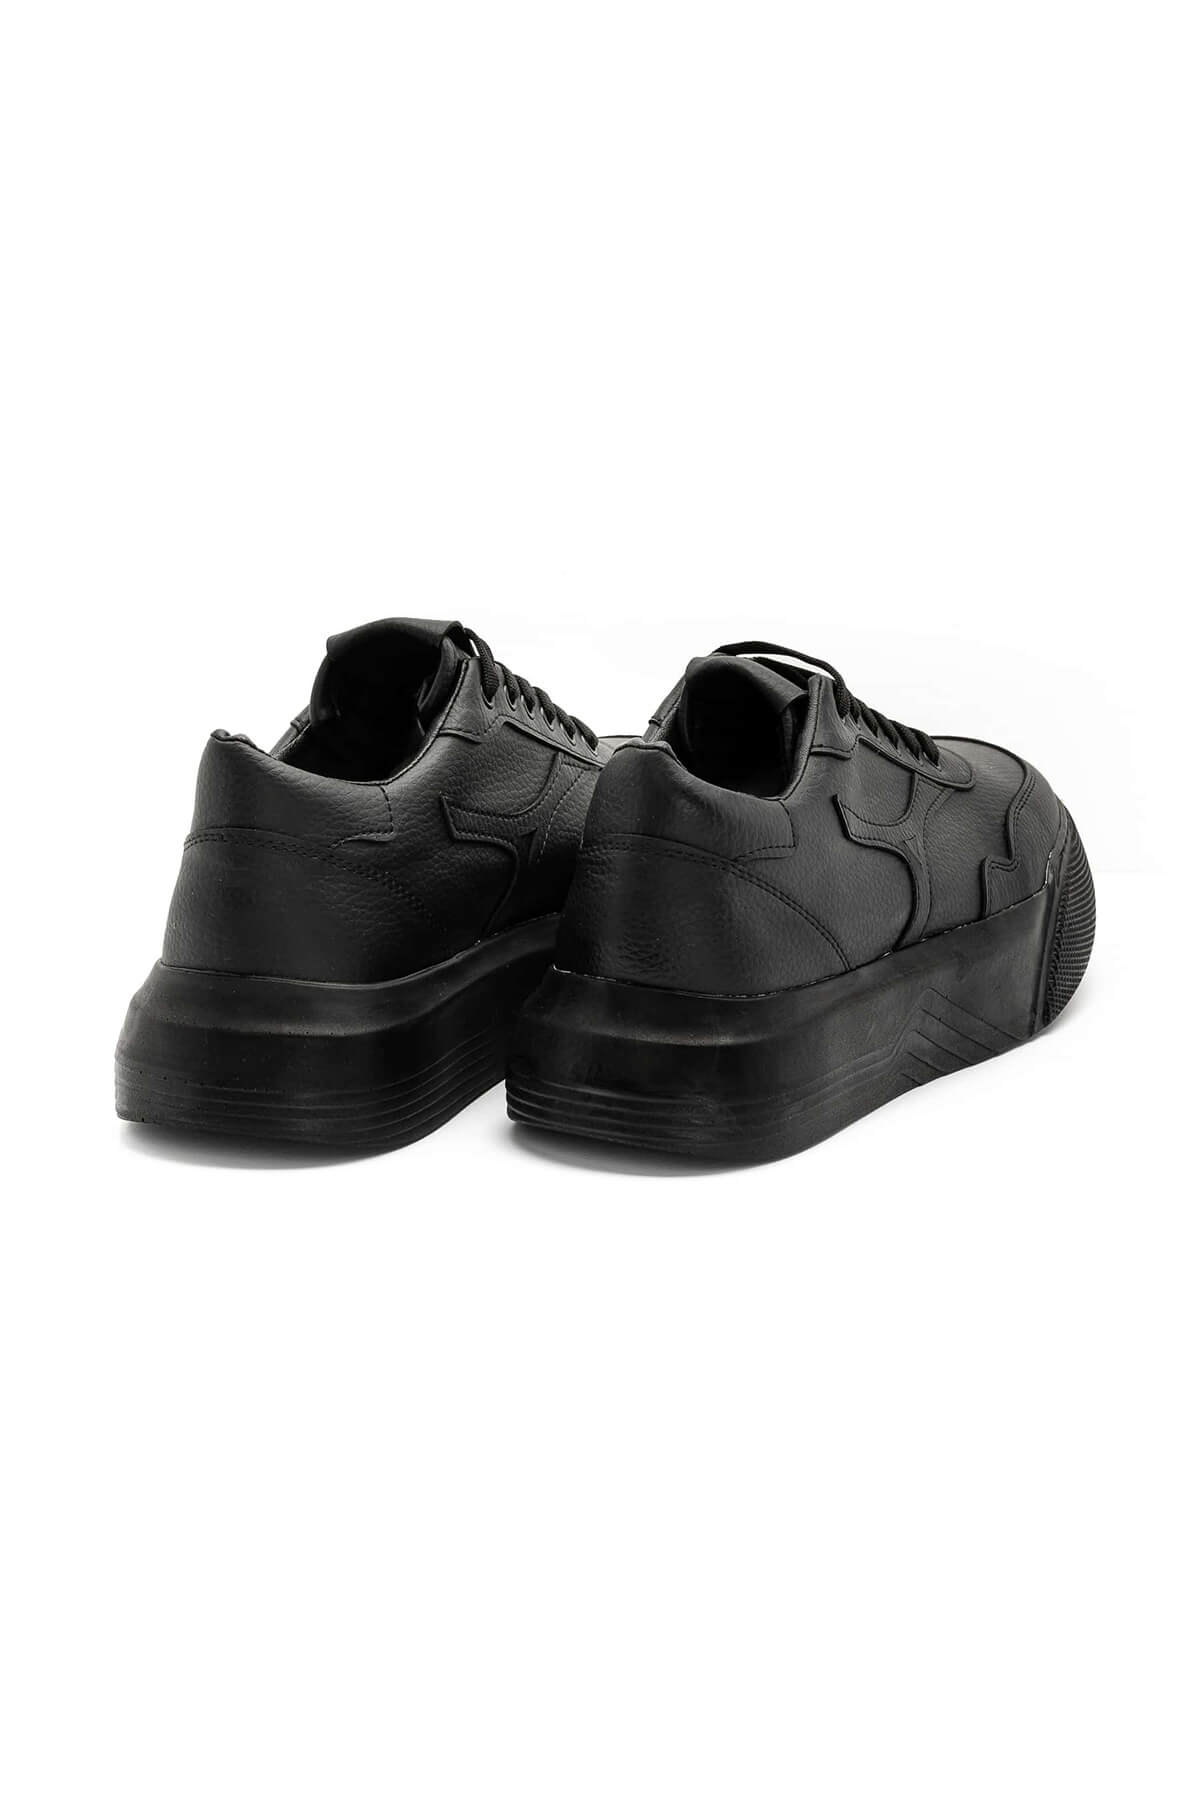 Mario Baldini Eco Leather Παπούτσια